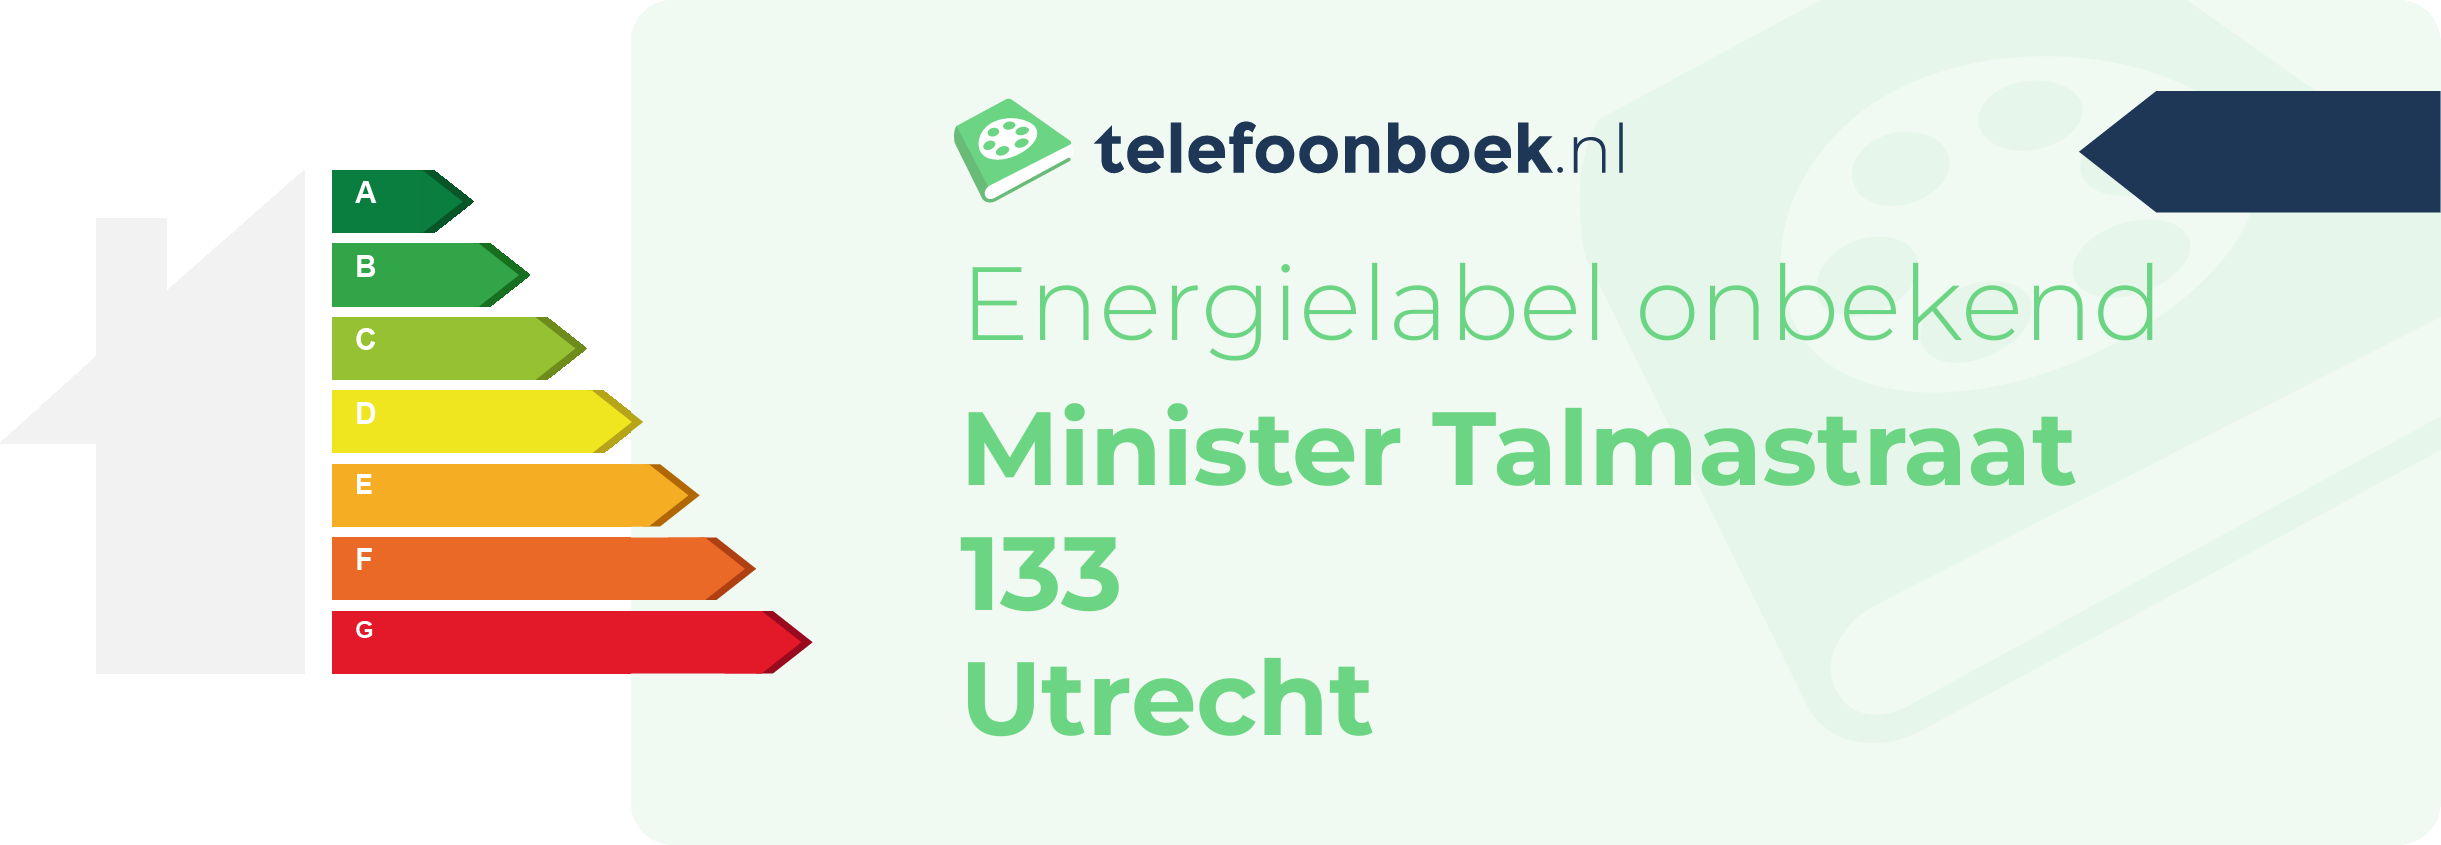 Energielabel Minister Talmastraat 133 Utrecht